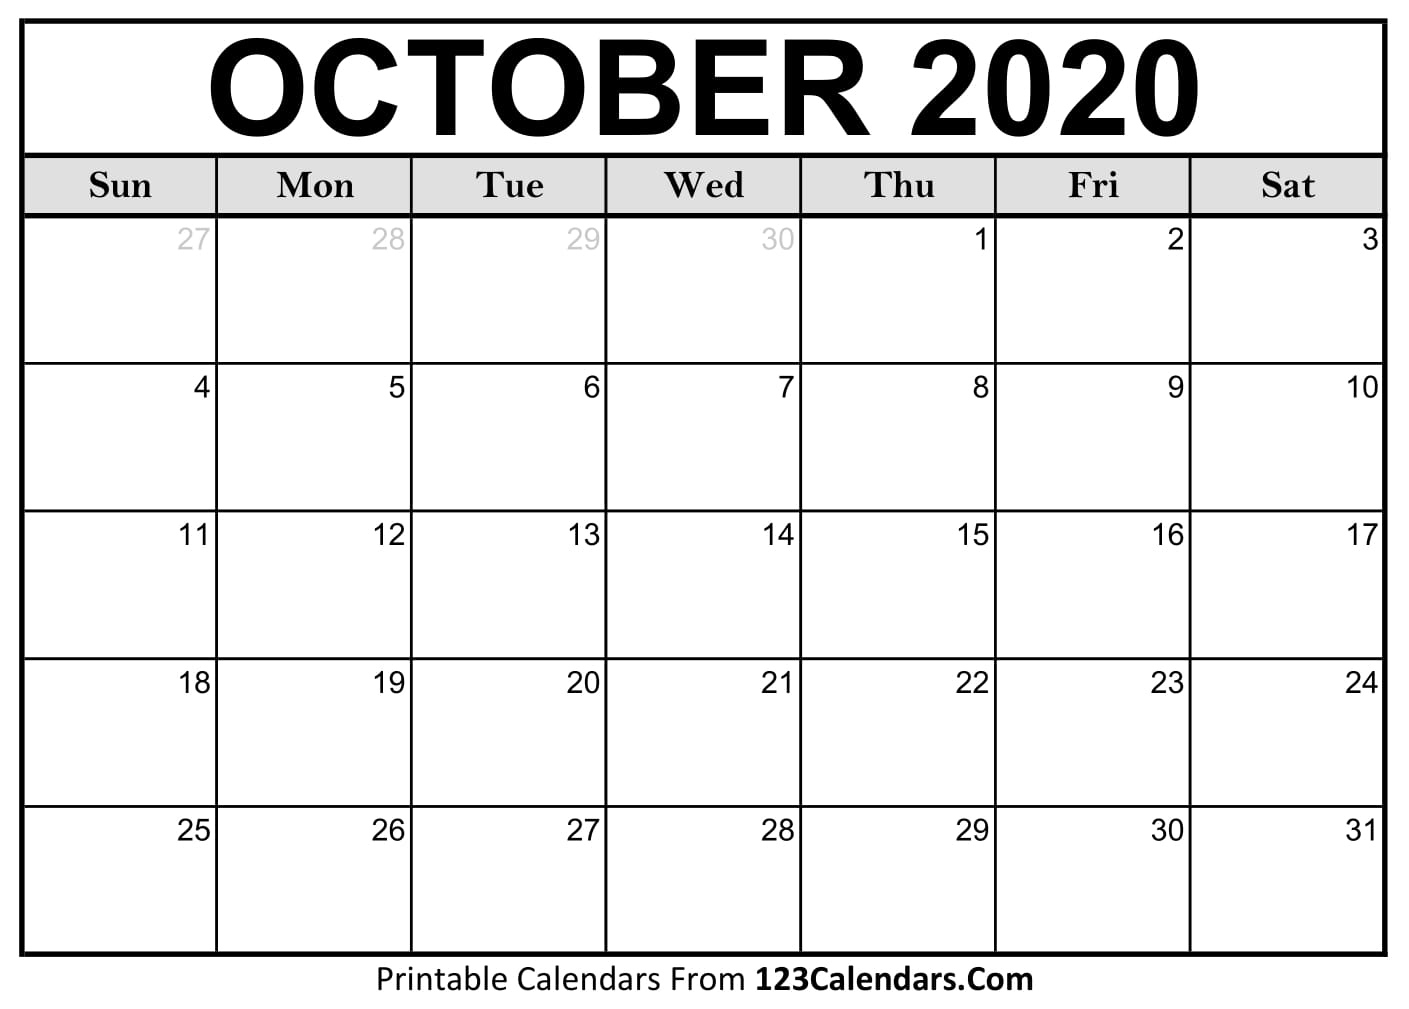 October 2020 Printable Calendar | 123Calendars Dashing 2020 Calendar With Holidays Vertex